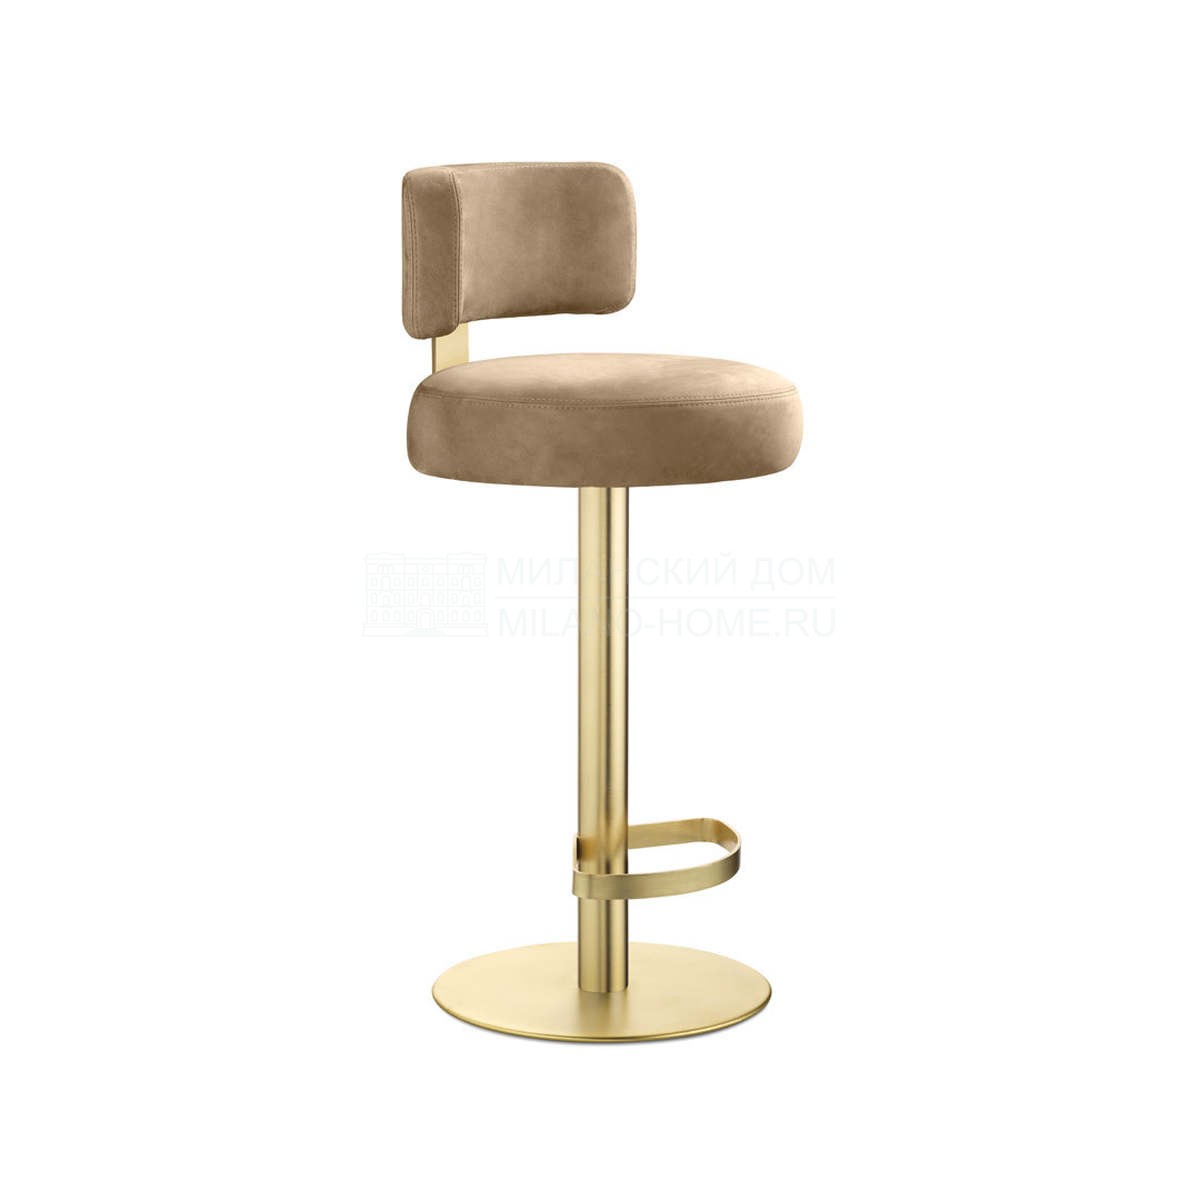 Барный стул Alfred stool из Италии фабрики GHIDINI 1961